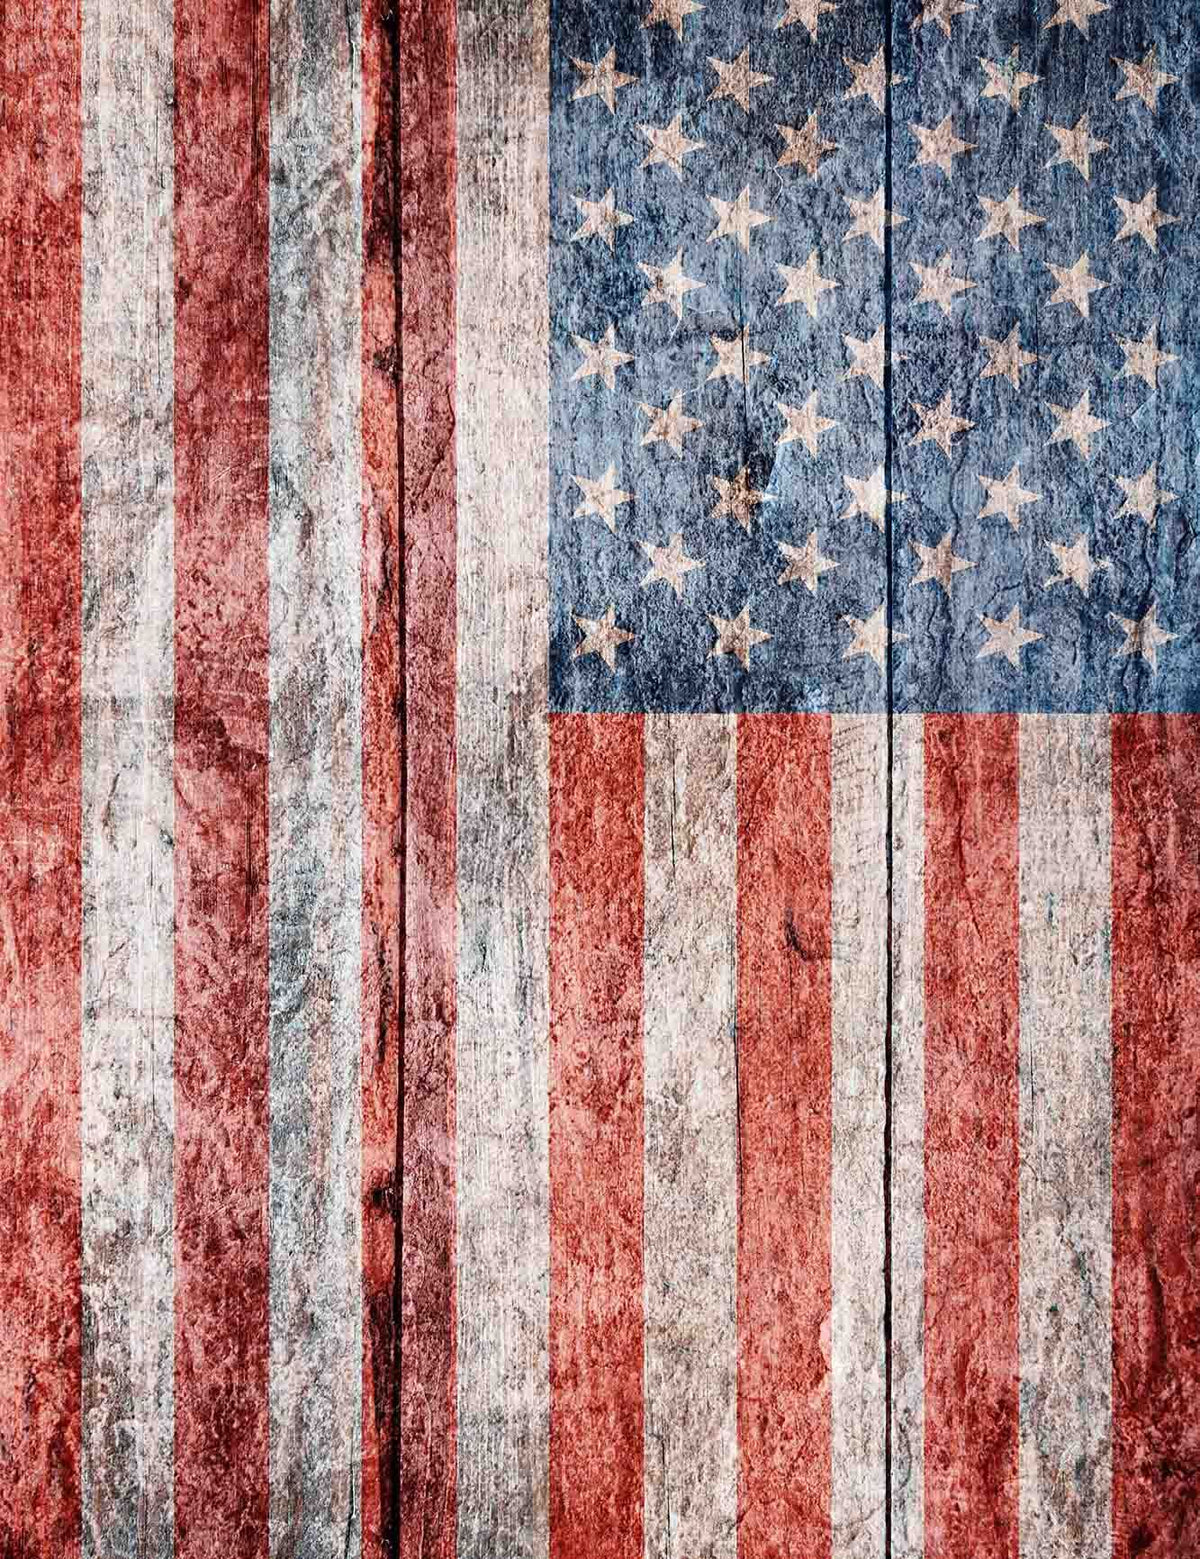 USA Flag Printed On Wood Floor Backdrop For Photography Shopbackdrop